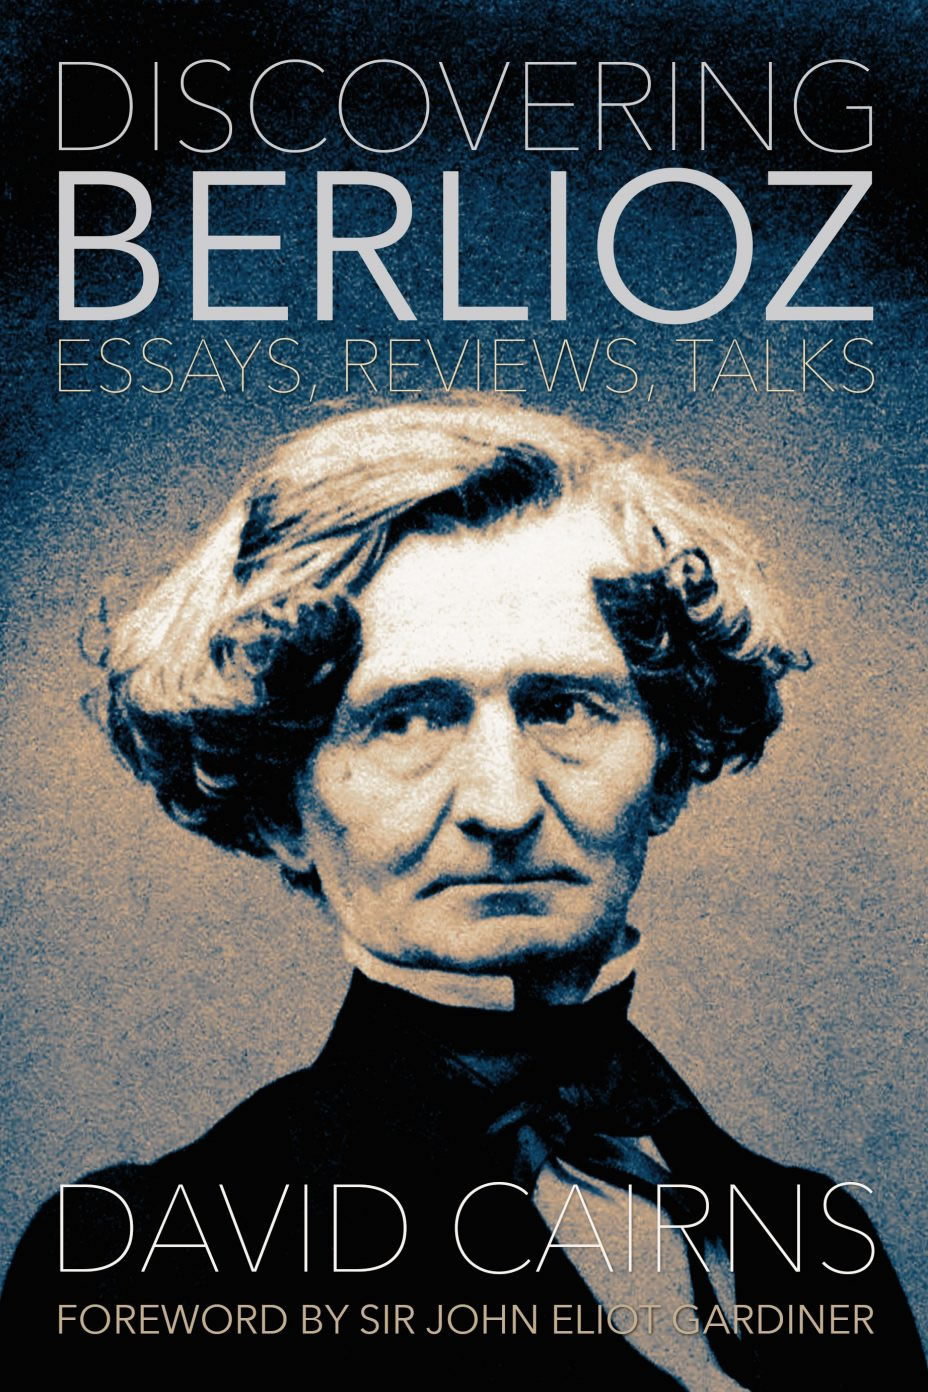 Book on Berlioz20